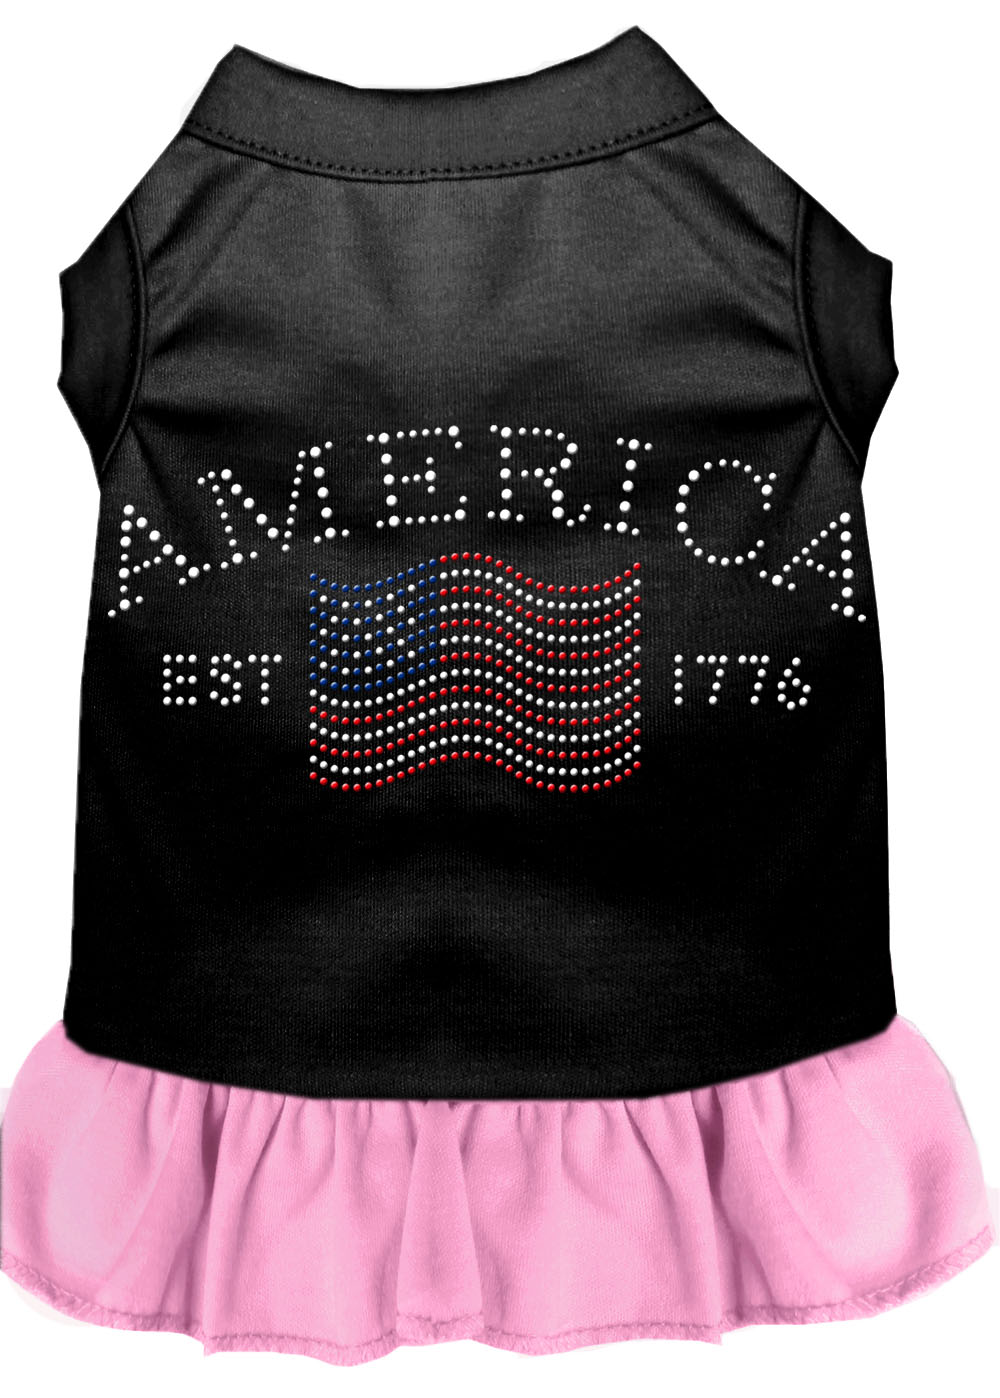 Classic America Rhinestone Dress Black with Light Pink XXL